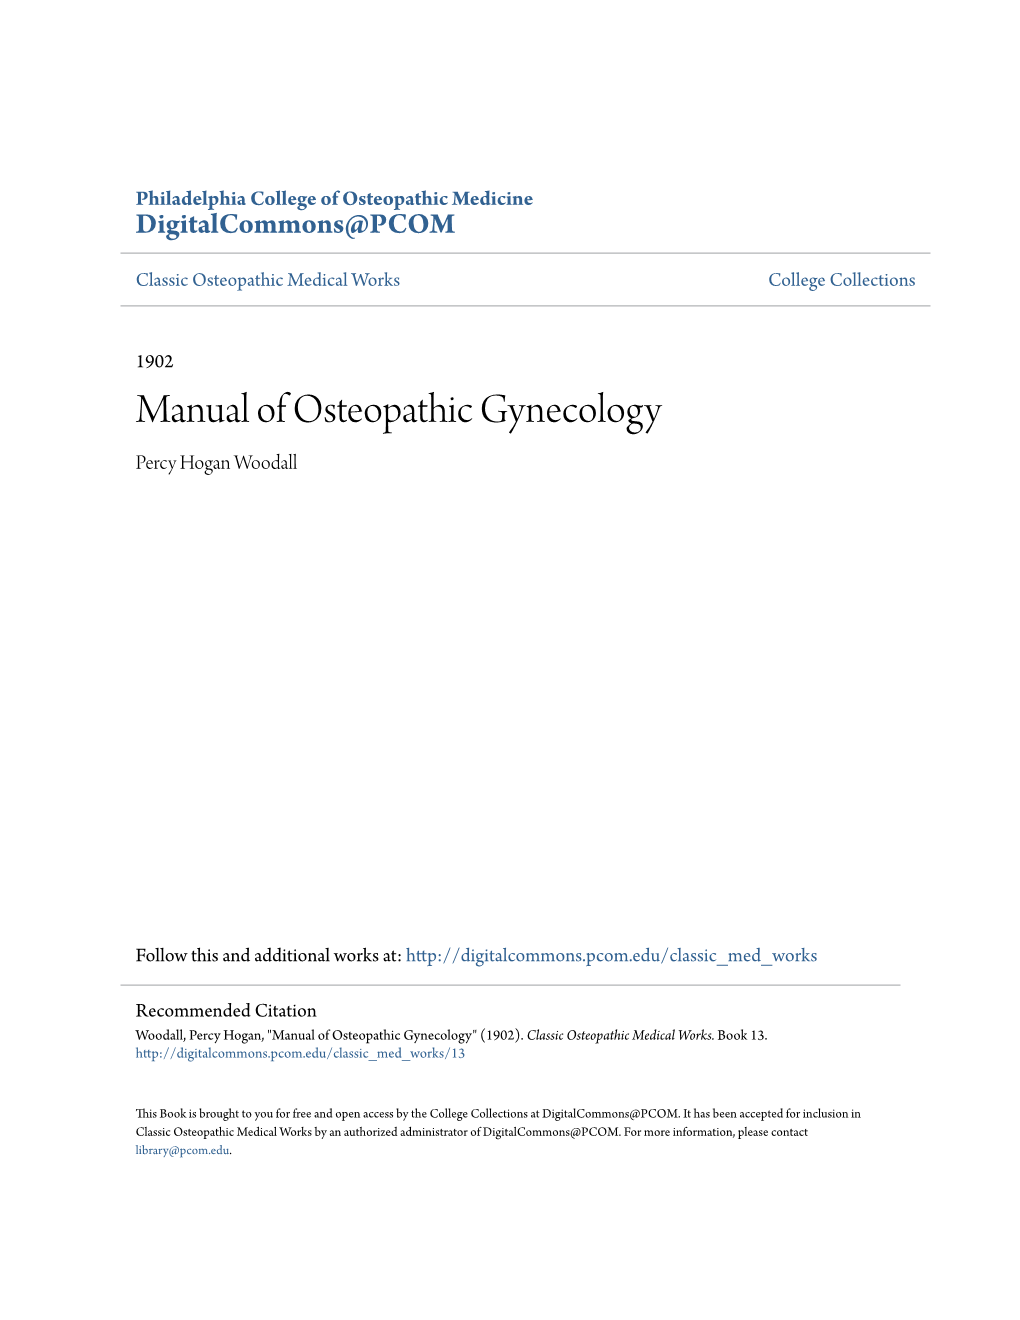 Manual of Osteopathic Gynecology Percy Hogan Woodall